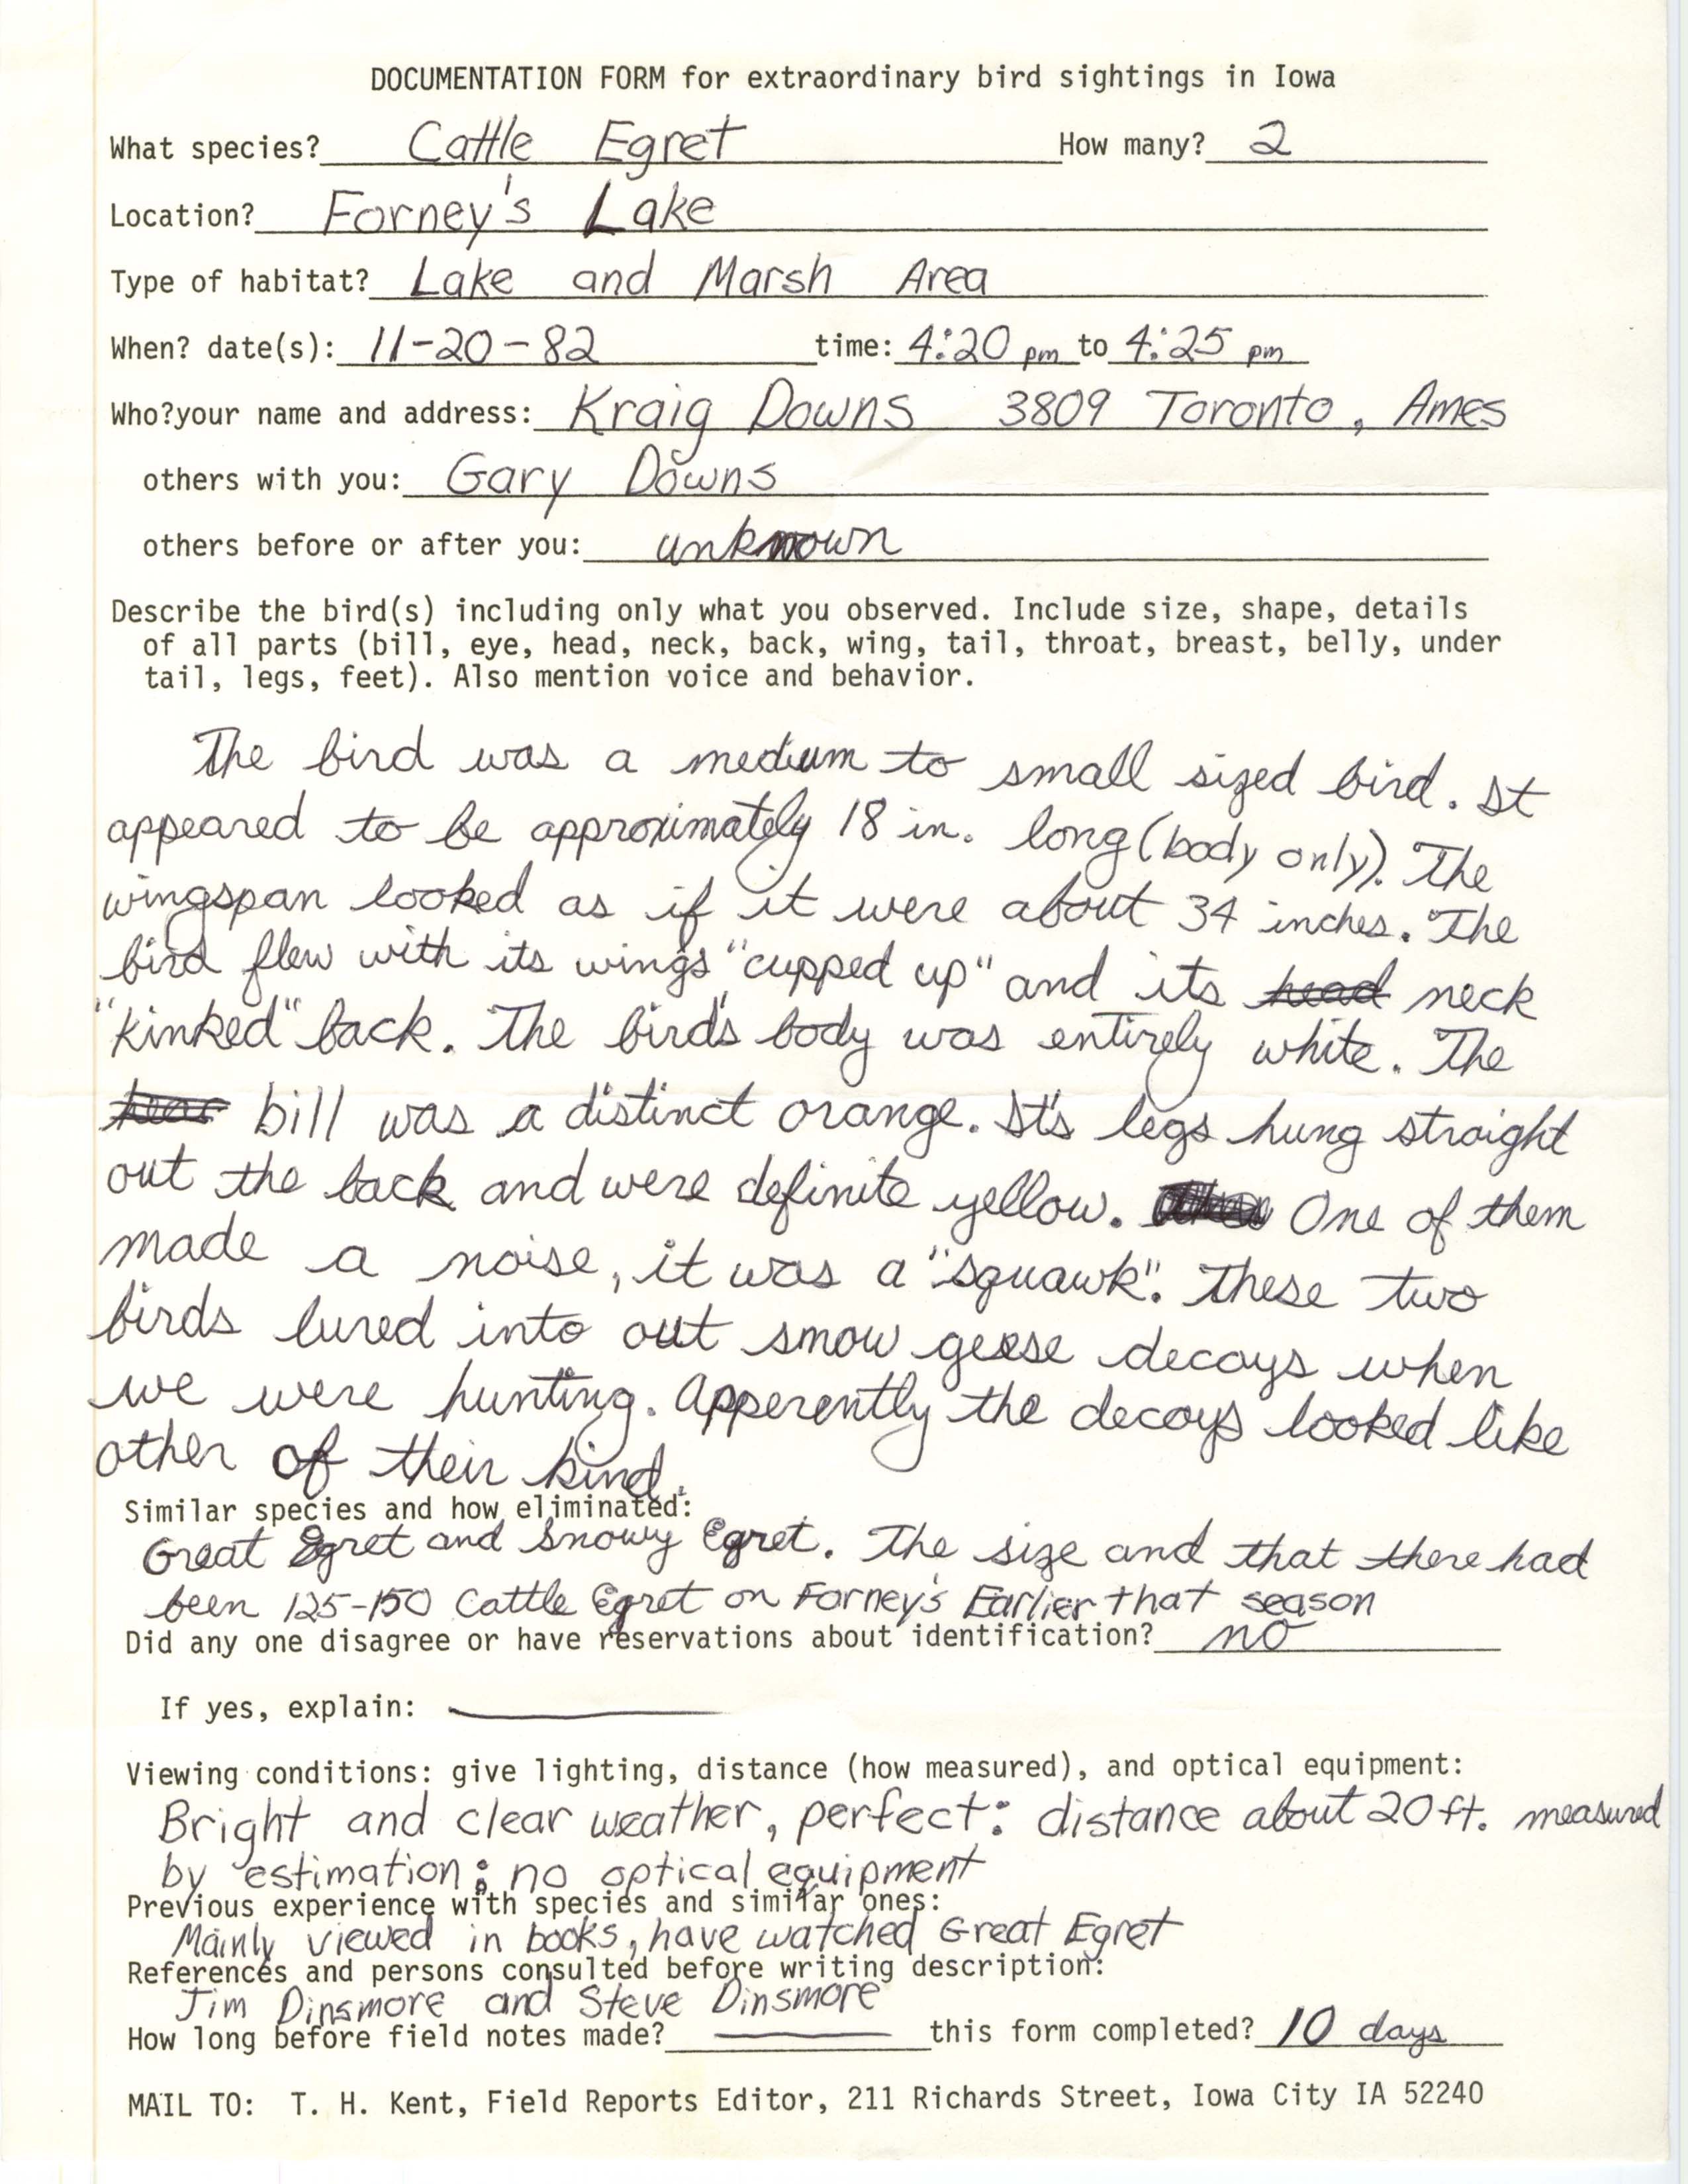 Rare bird documentation form for Cattle Egret at Forney's Lake, 1982